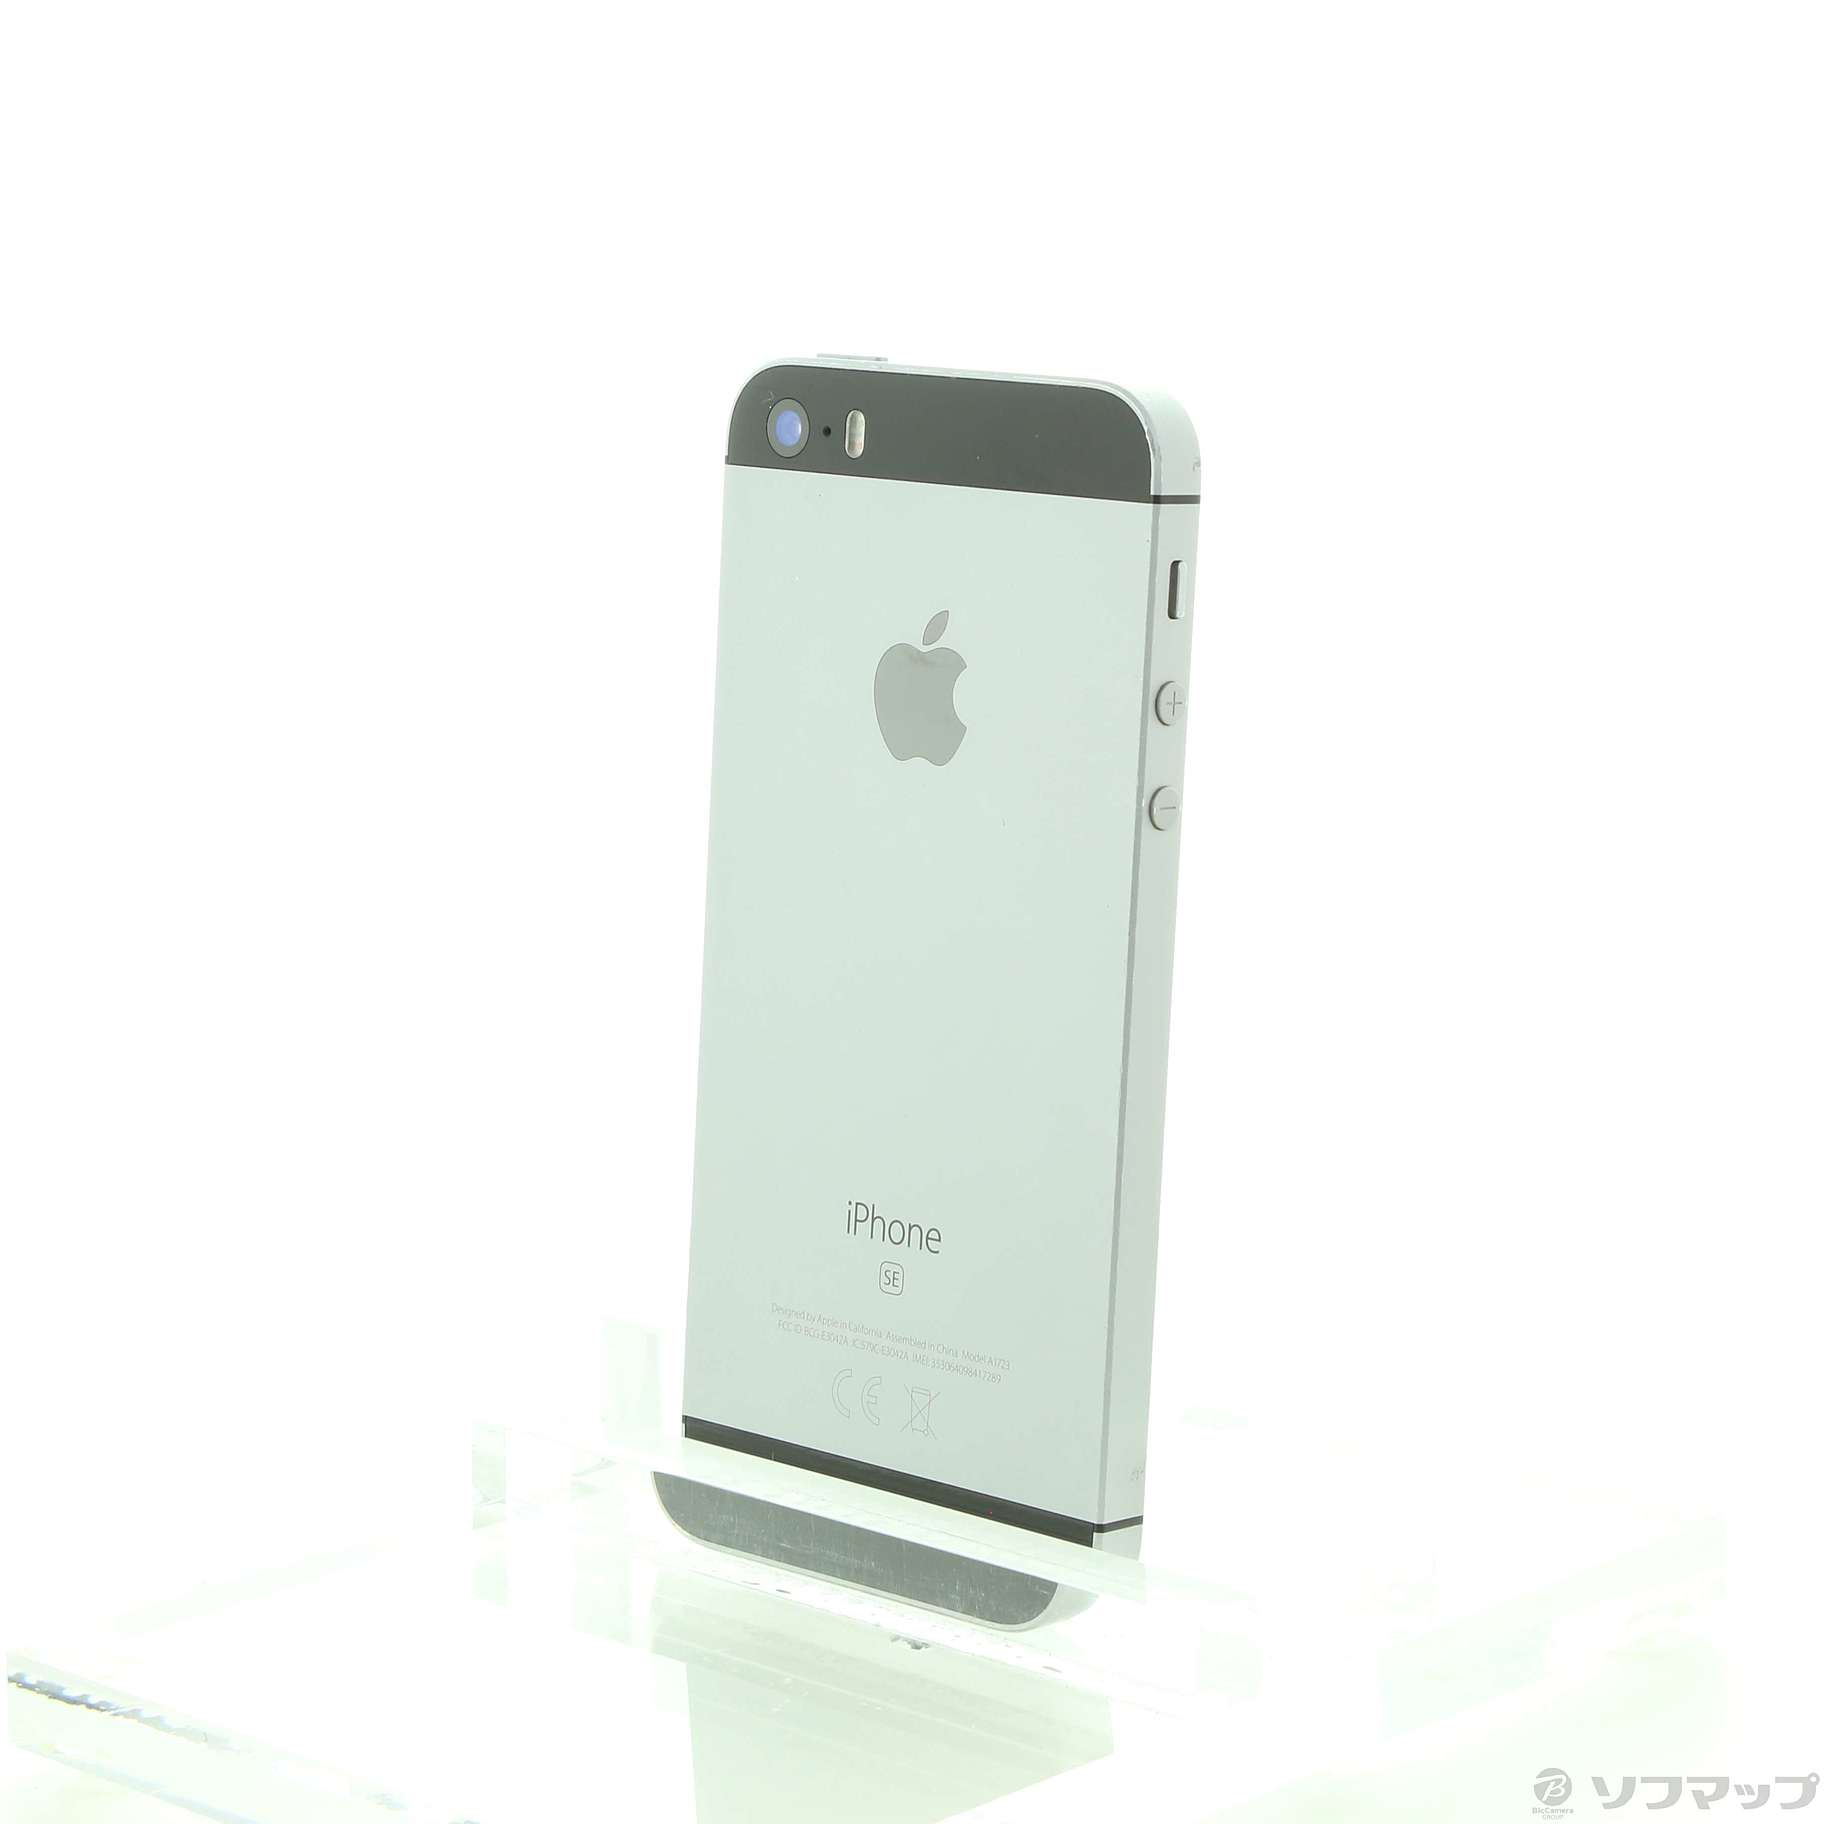 iPhone SE Space Gray 32 GB UQ mobile